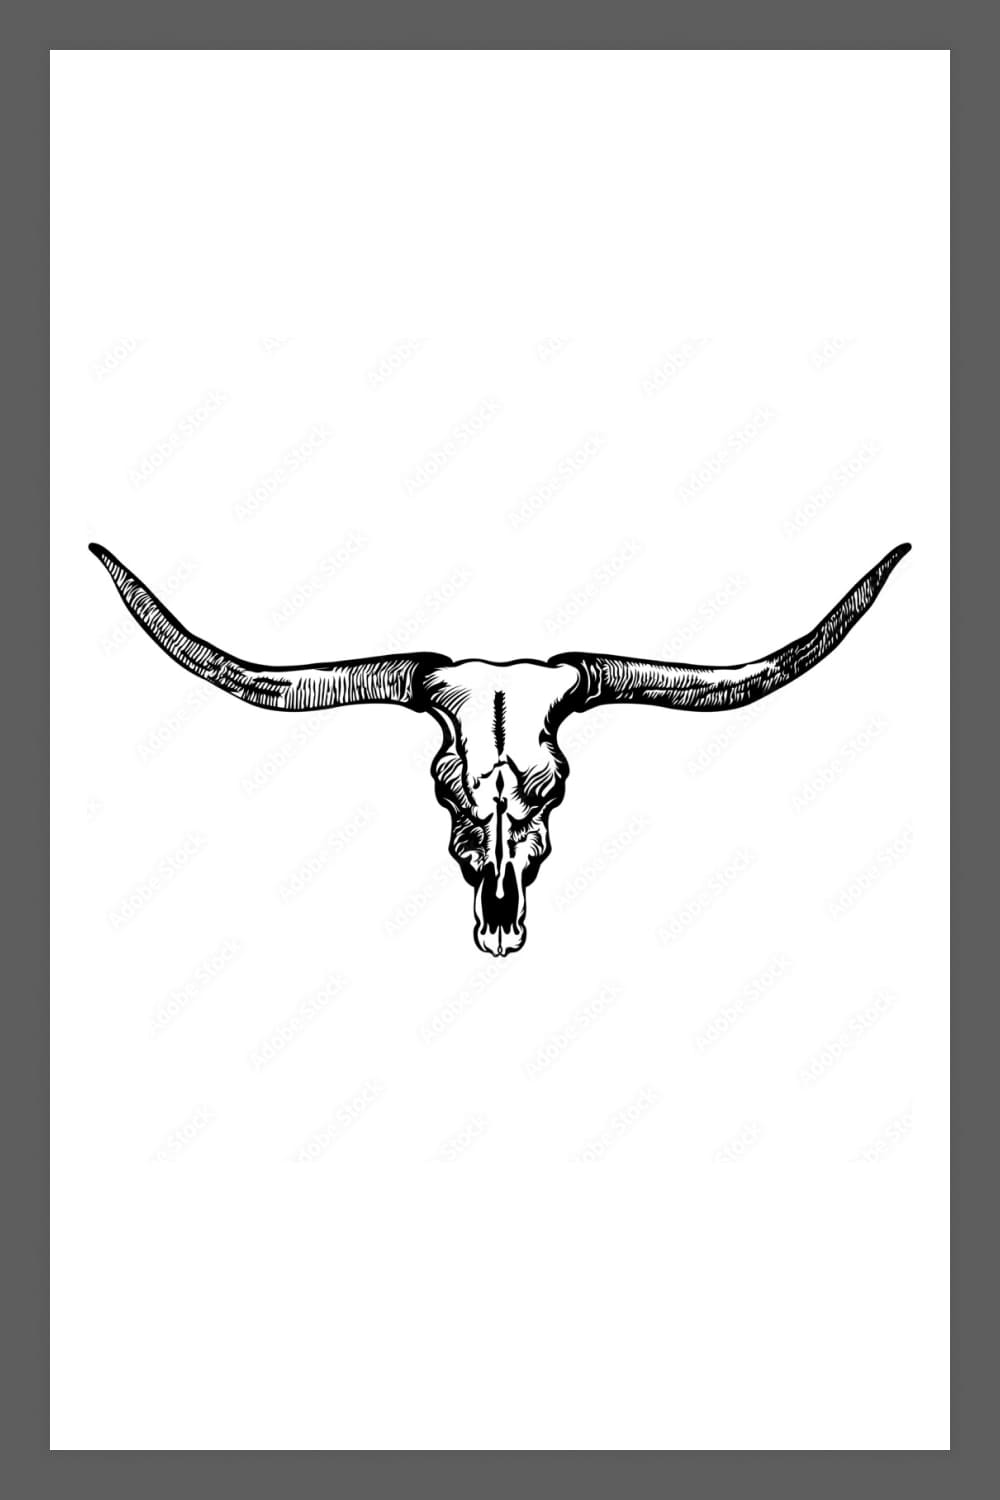 Longhorn skull with big horns.